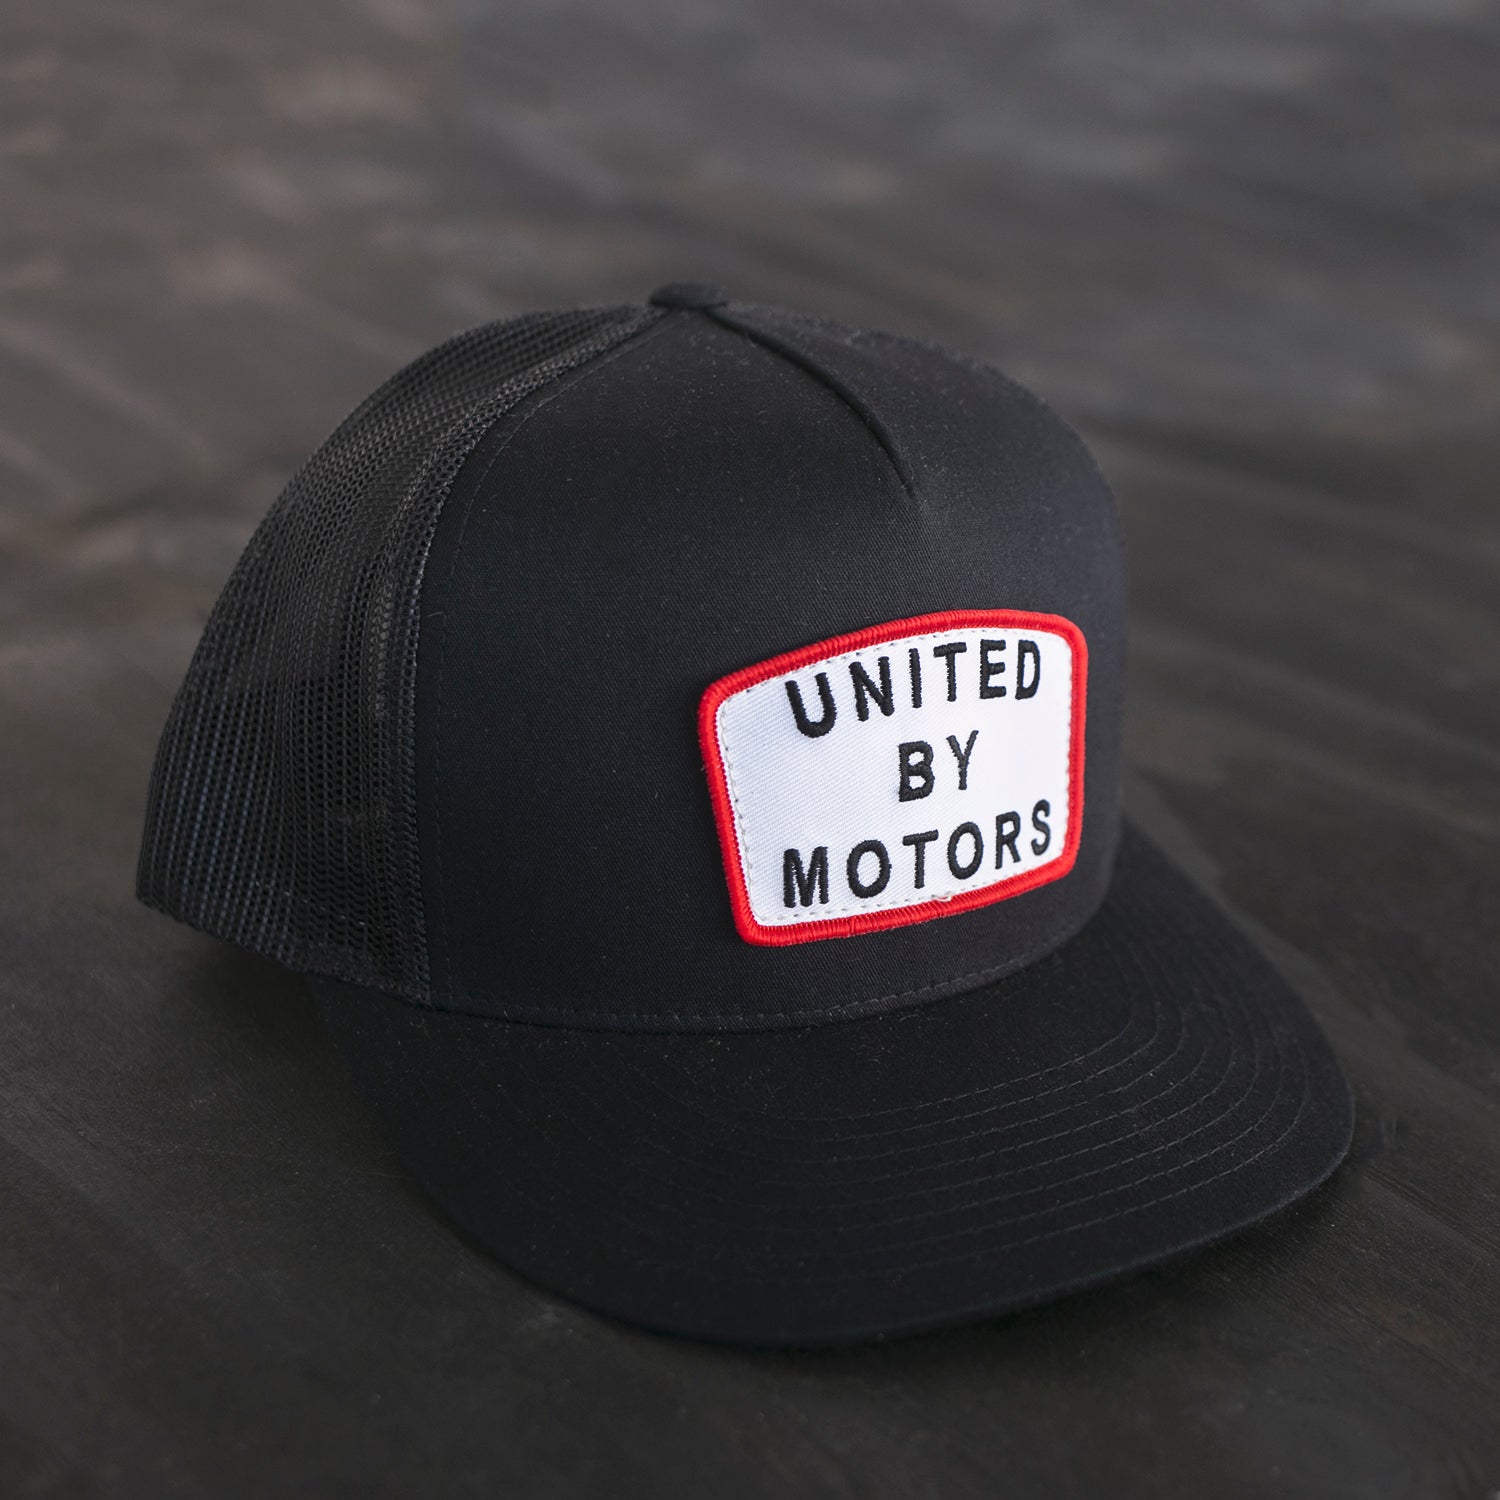 United by motors black trucker hat motorcycle hot rod